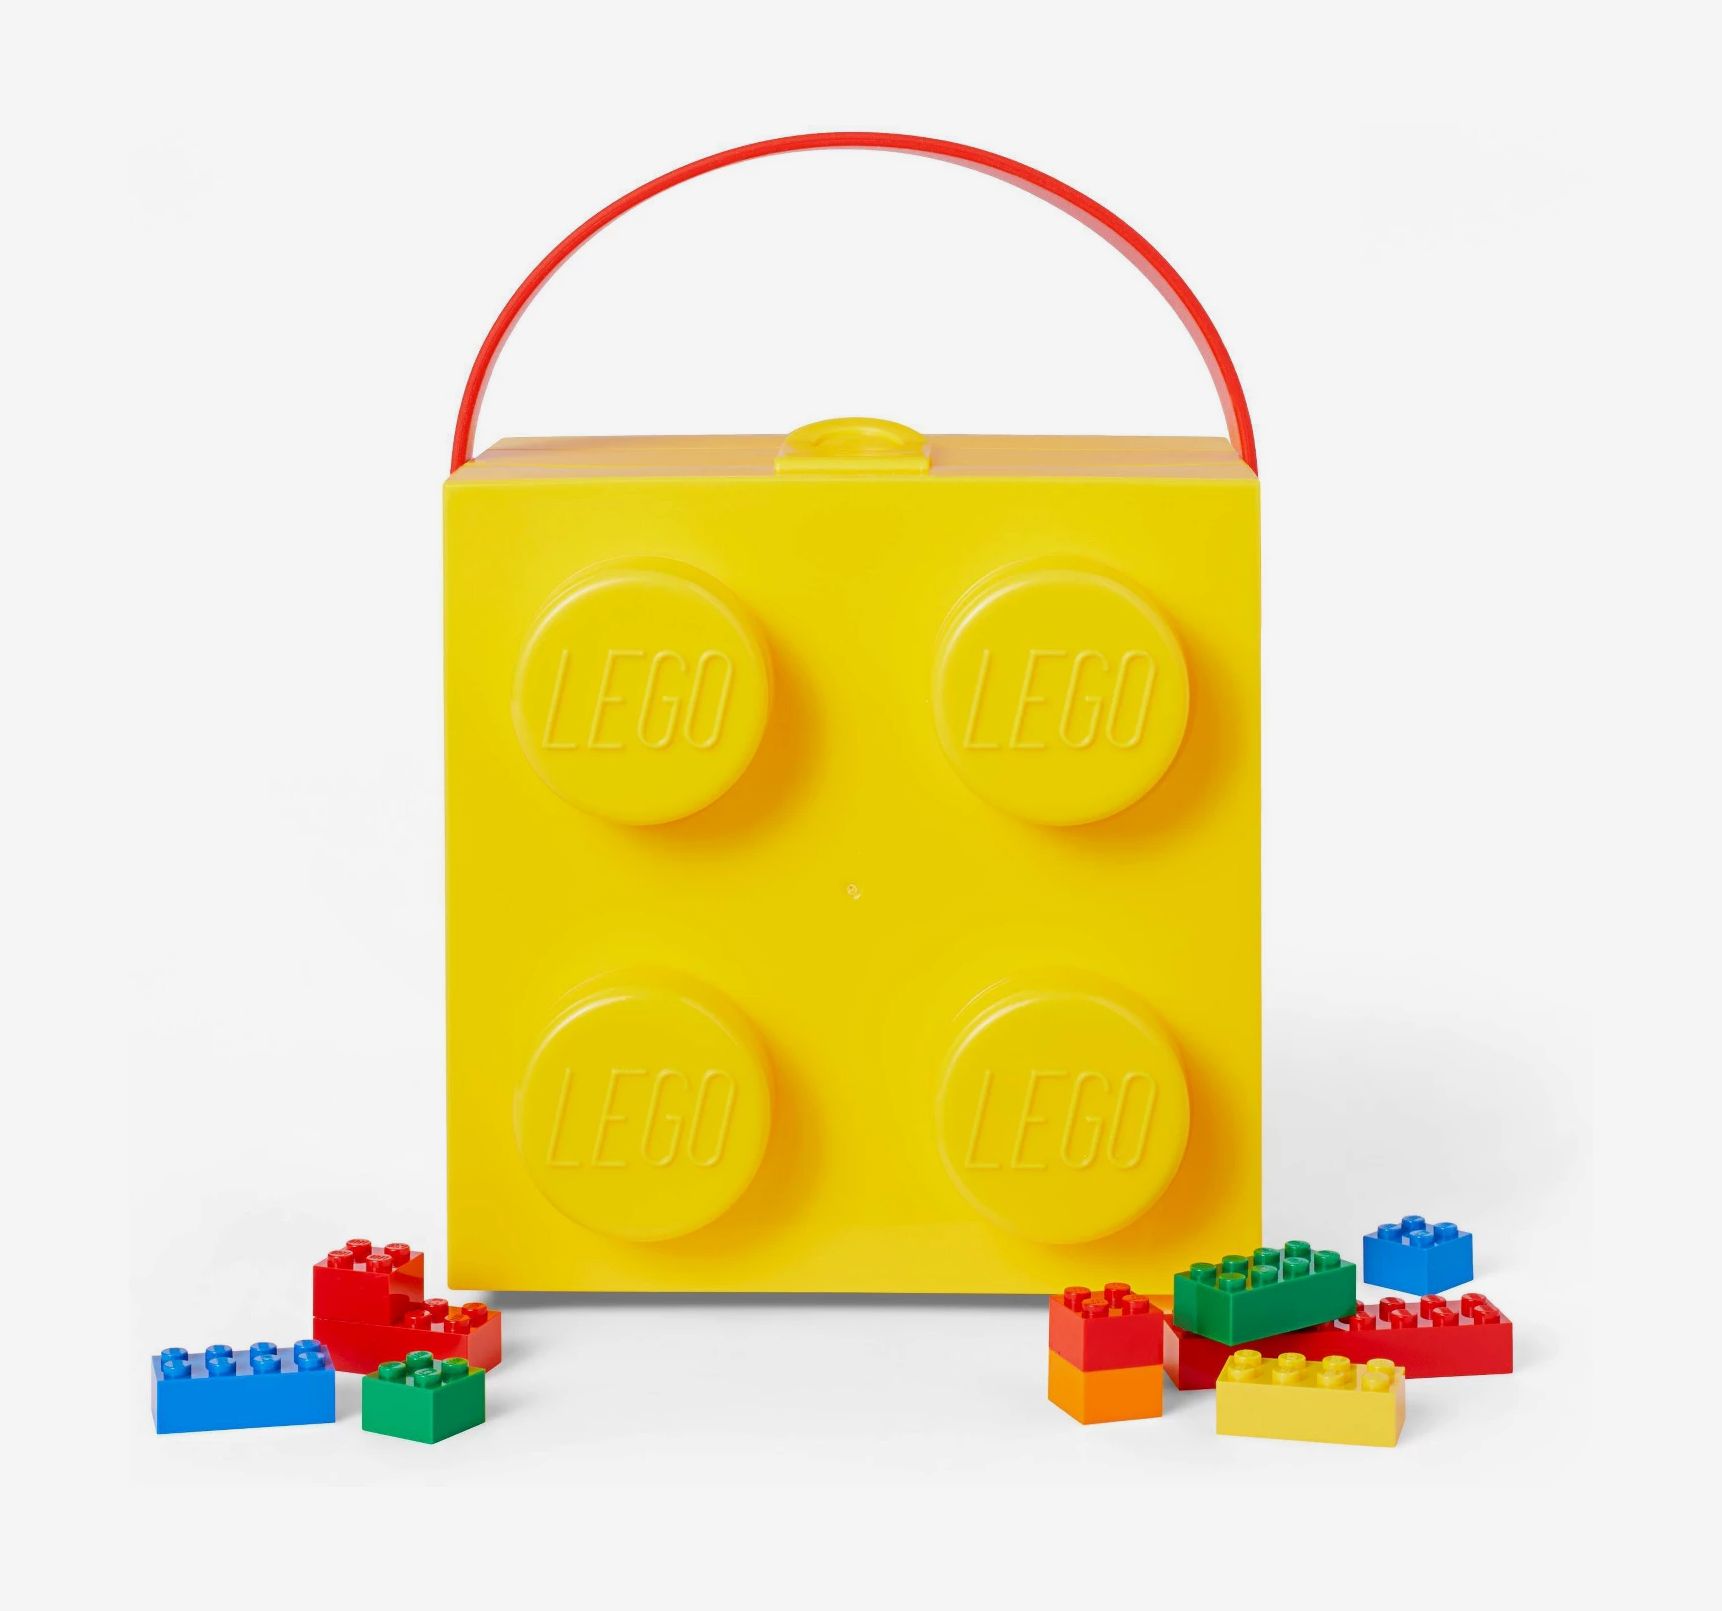 Achterhouden Wonderbaarlijk Clancy LEGO Collection x Target Collaboration Collection Launch | The Strategist